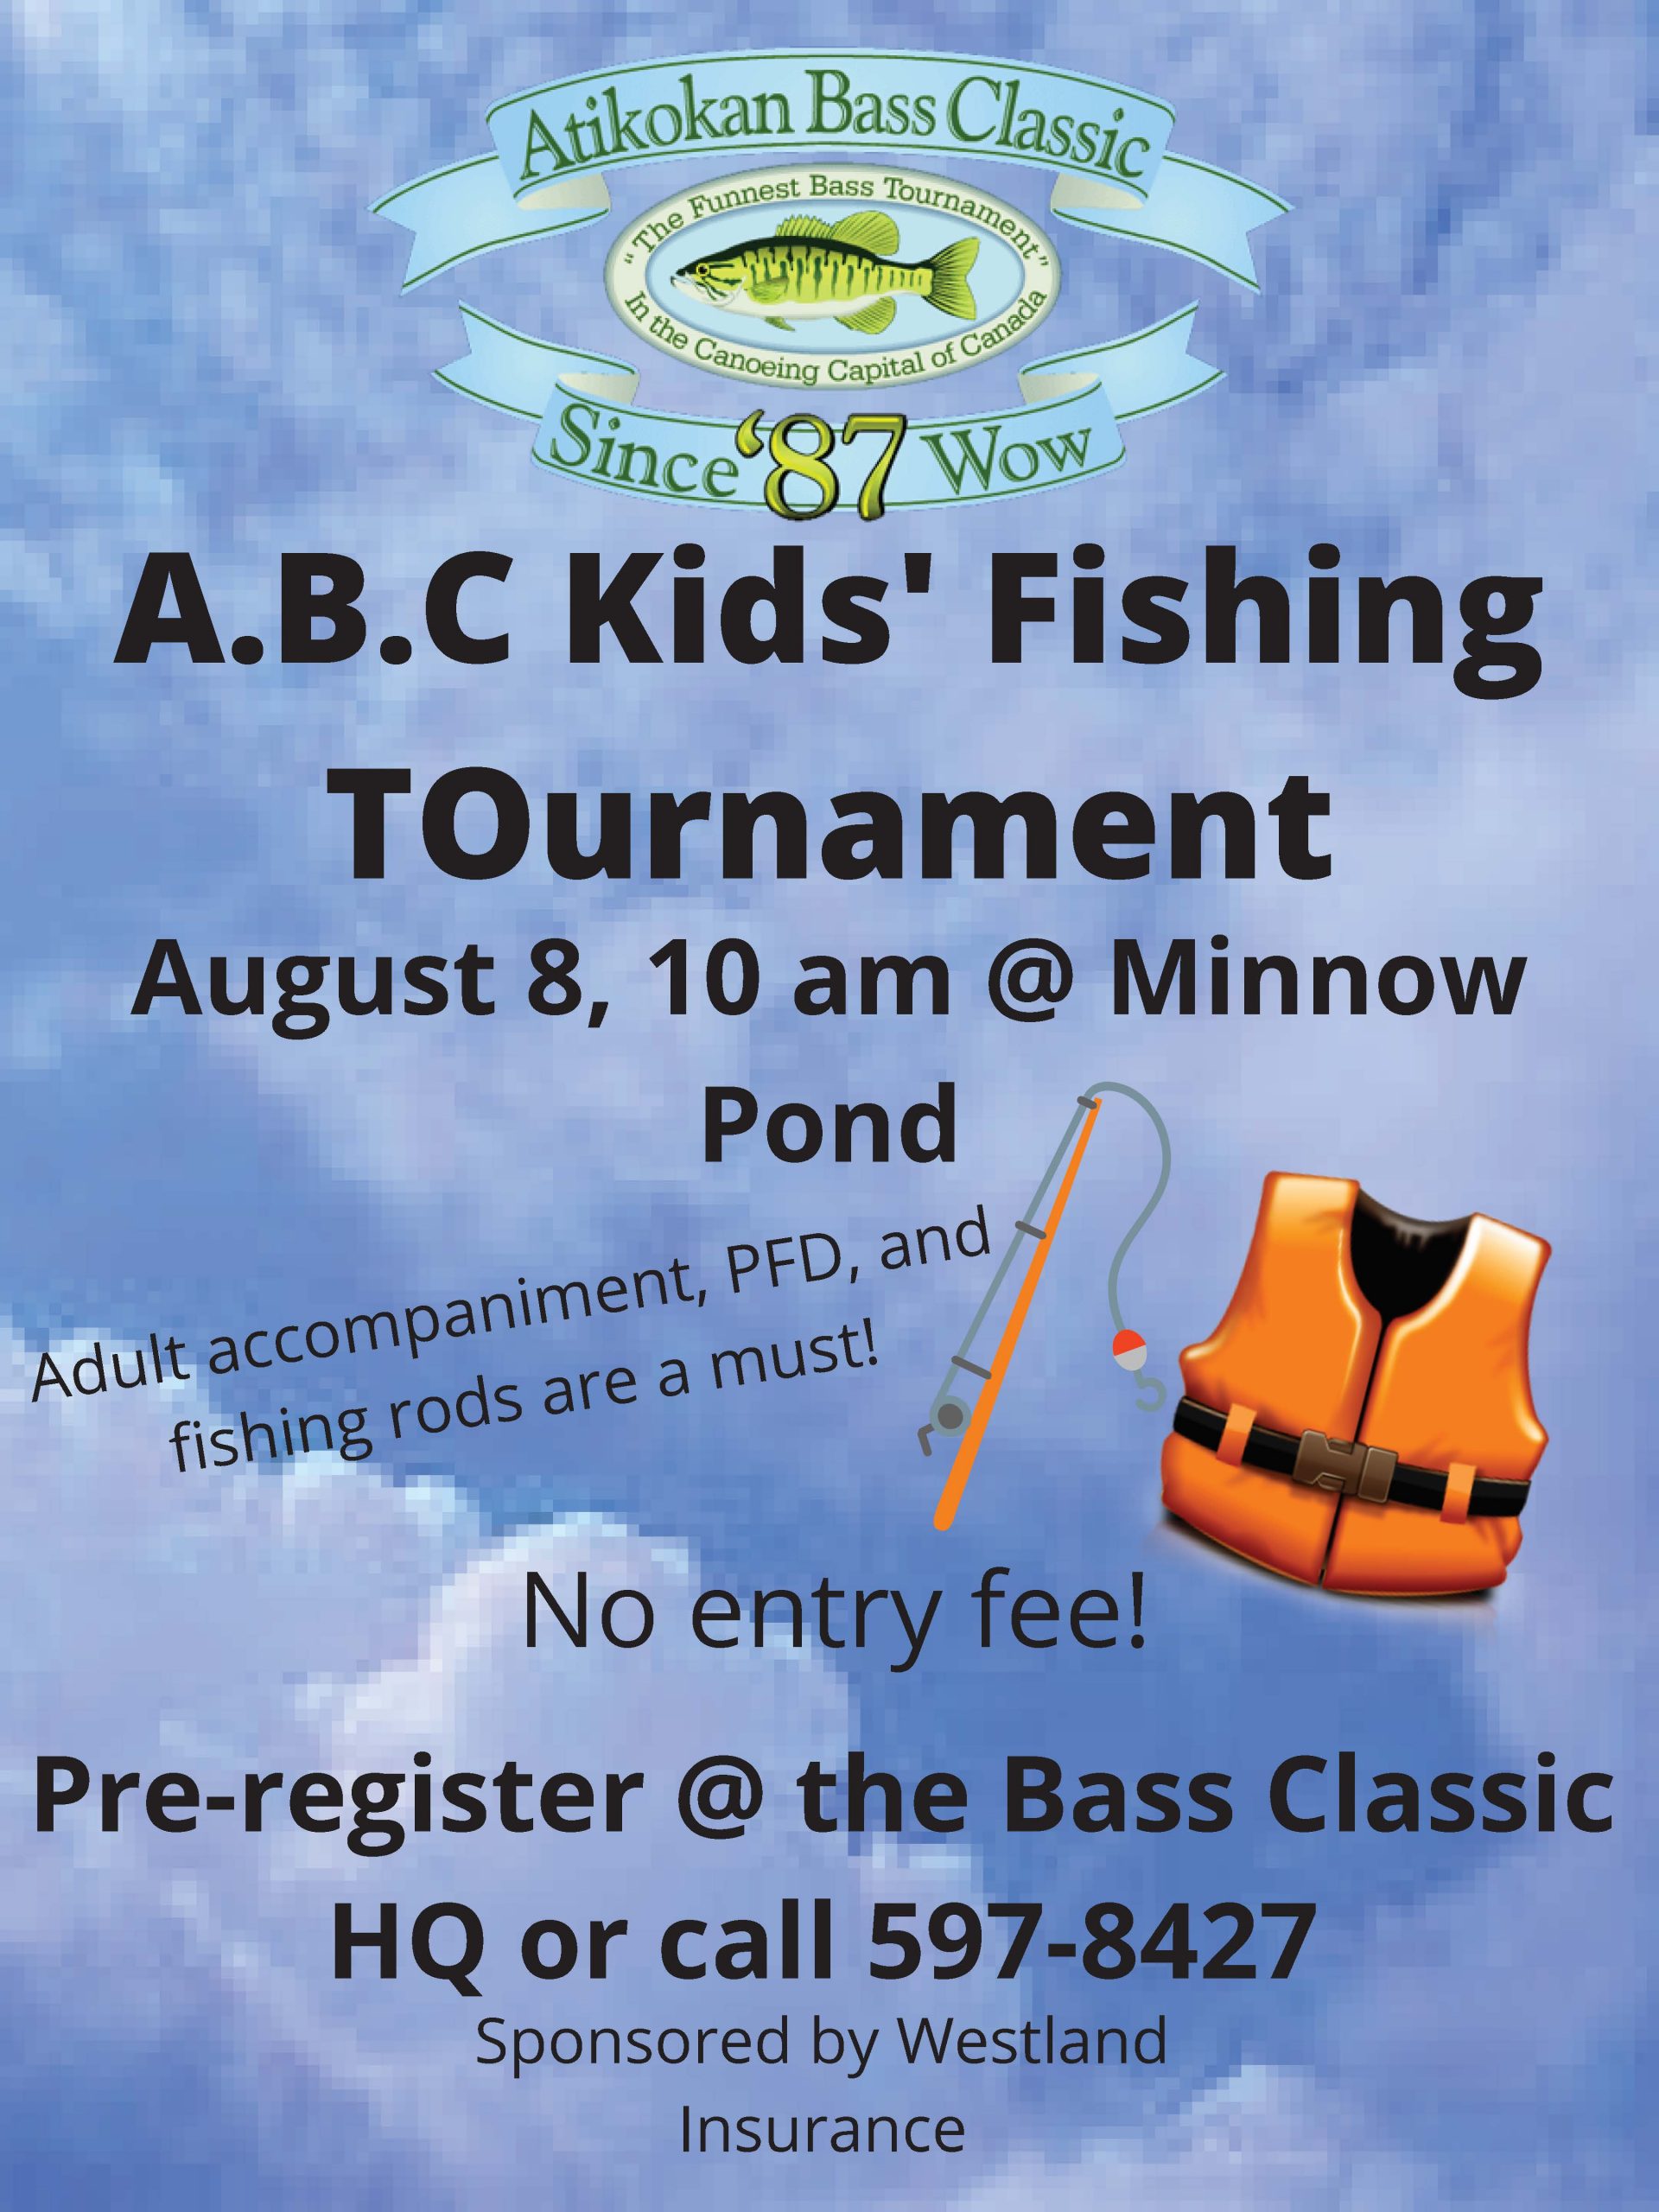 Atikokan Bass Classic Kids' Fishing Tournament - Atikokan